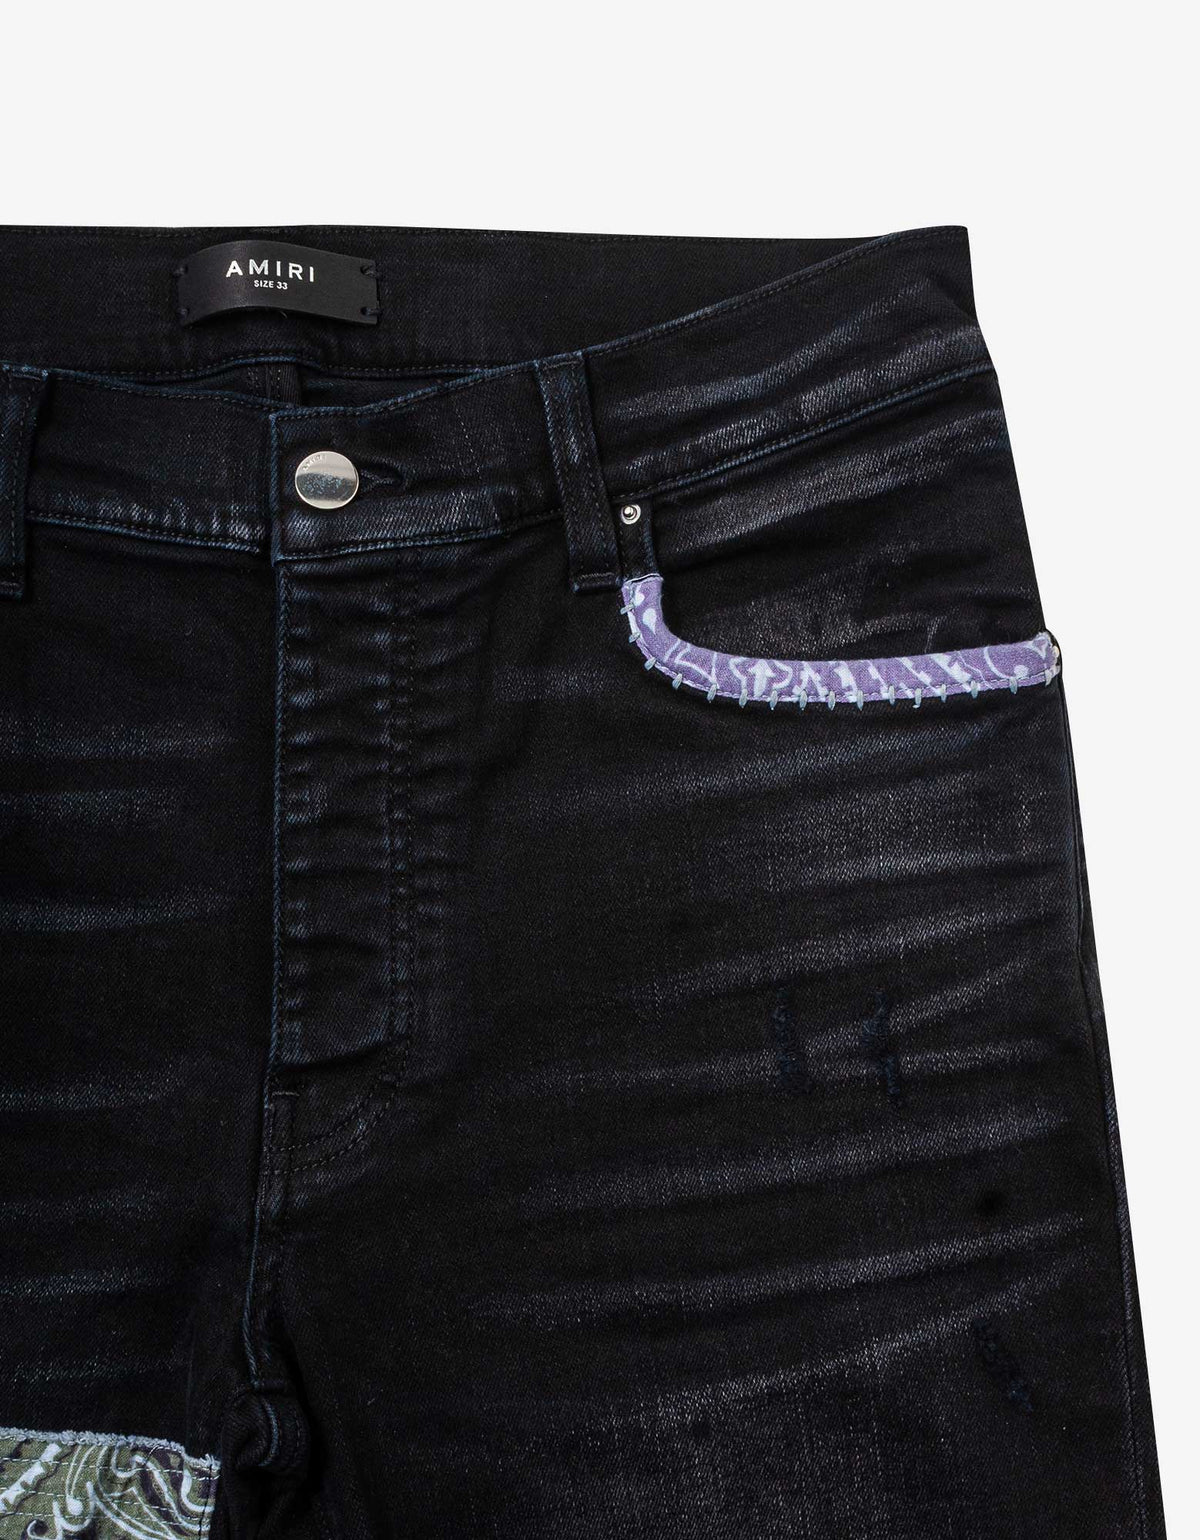 Amiri Bandana Art Patch Aged Black Jeans